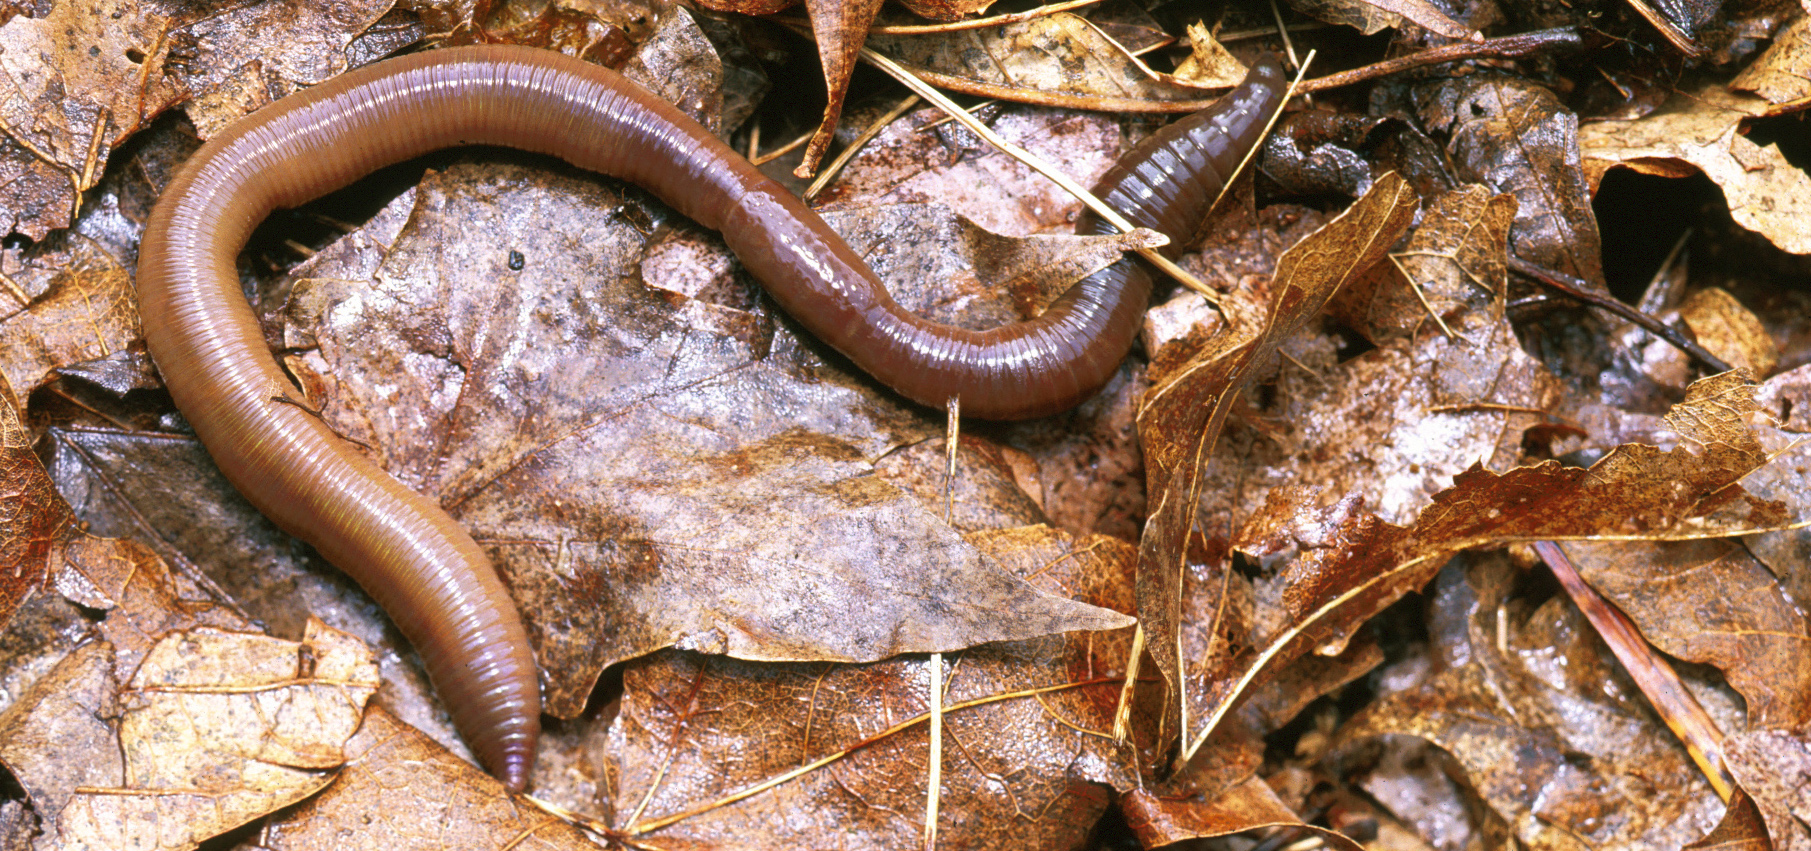 earthworm on top of brown fallen leaves